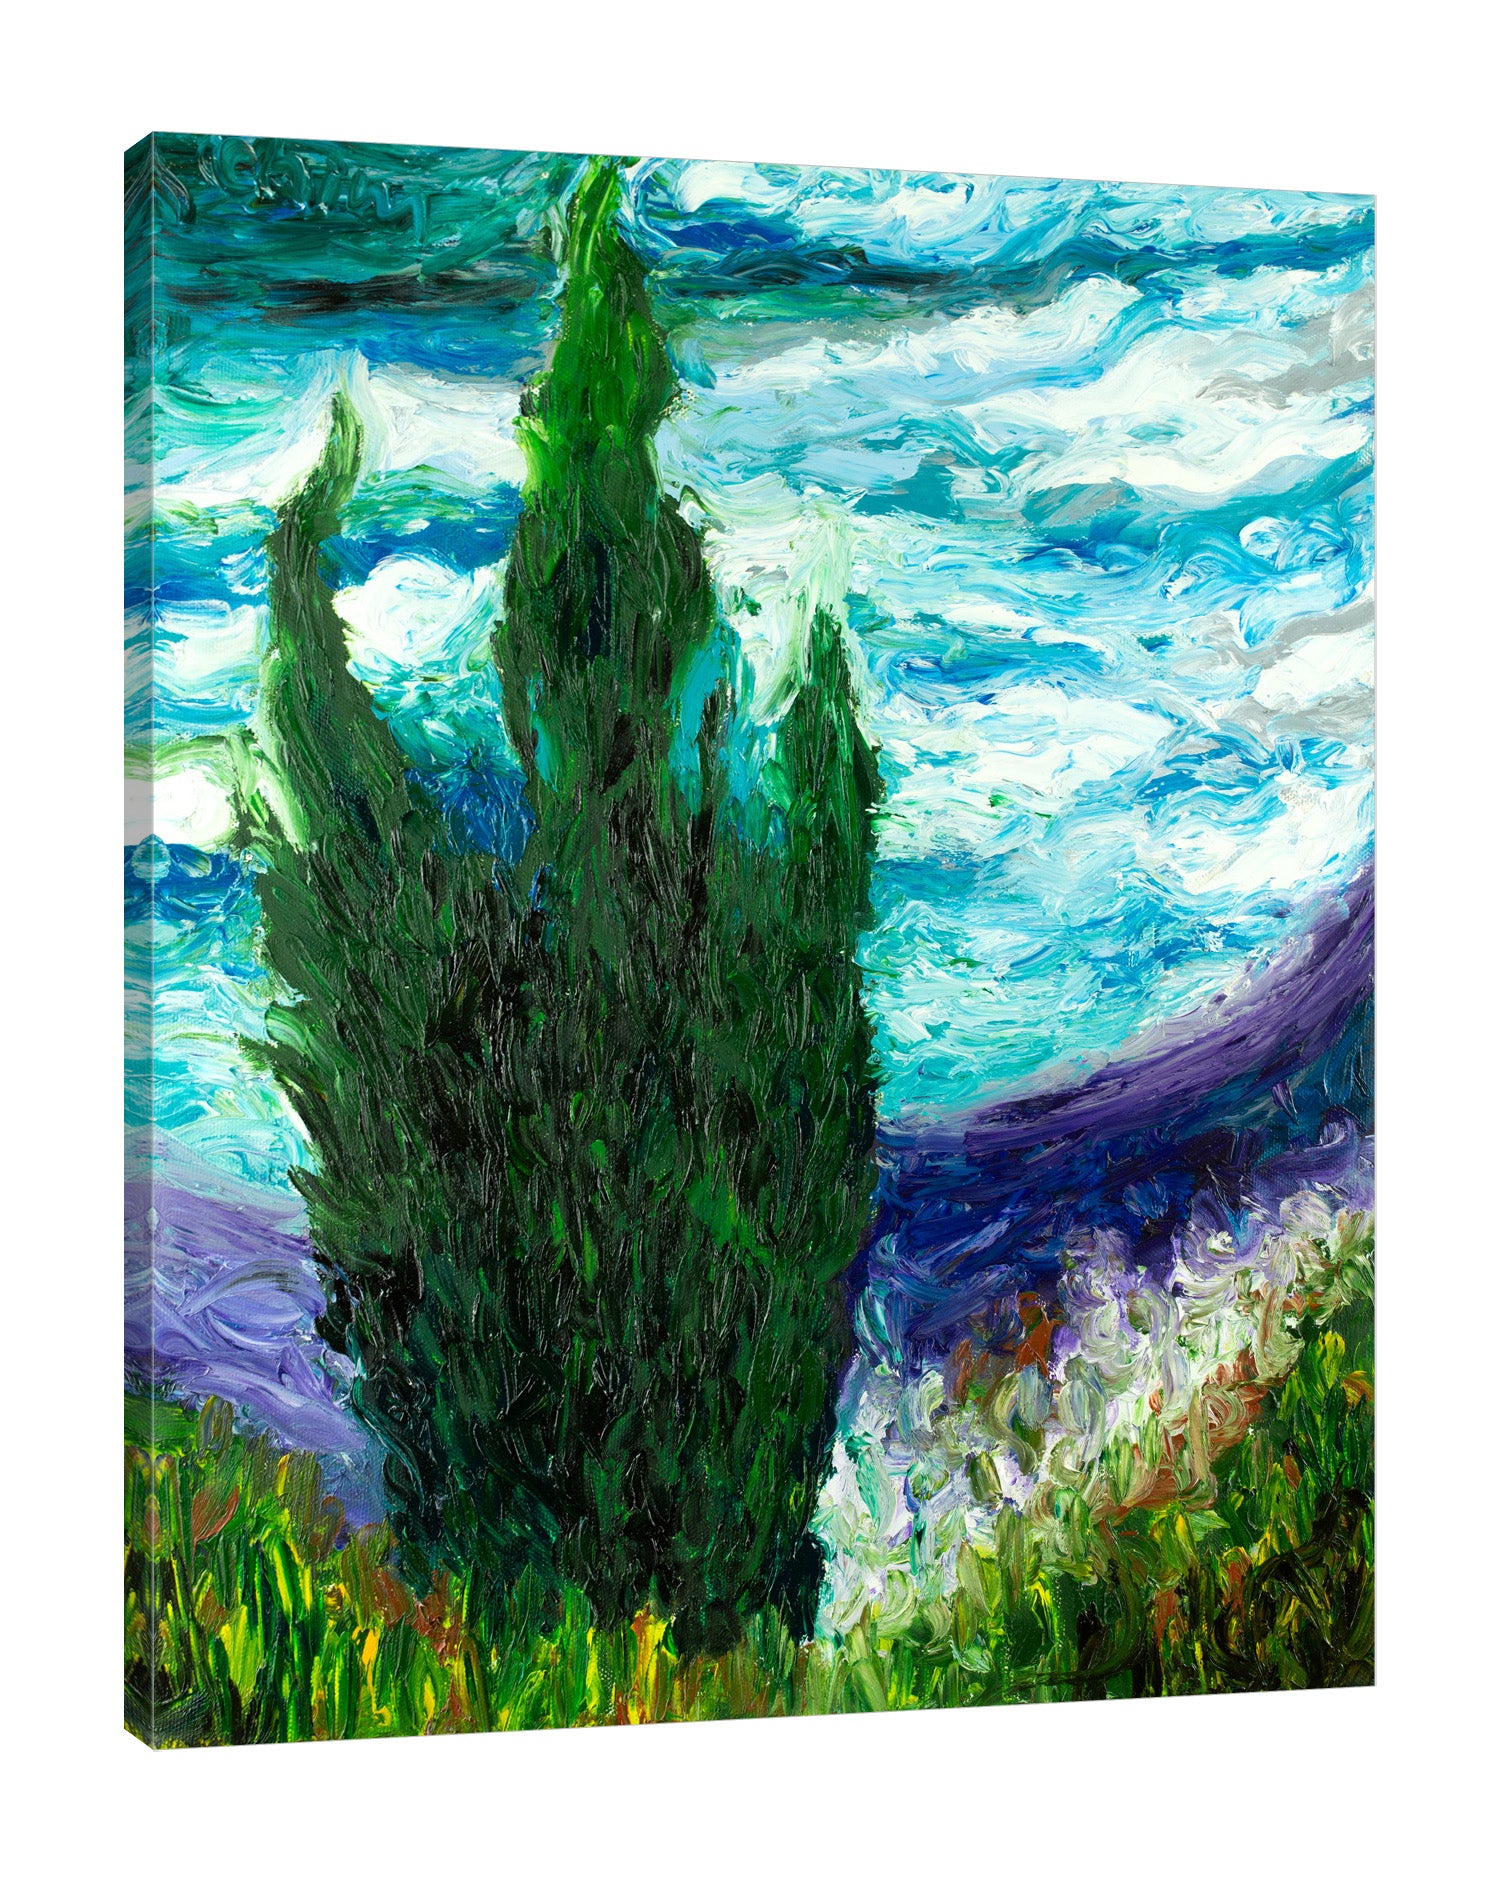 Chiara-Magni,Modern & Contemporary,Landscape & Nature,Finger-paint,trees,tree,mountains,mountain,grass,blue,skies,clouds,portrait,